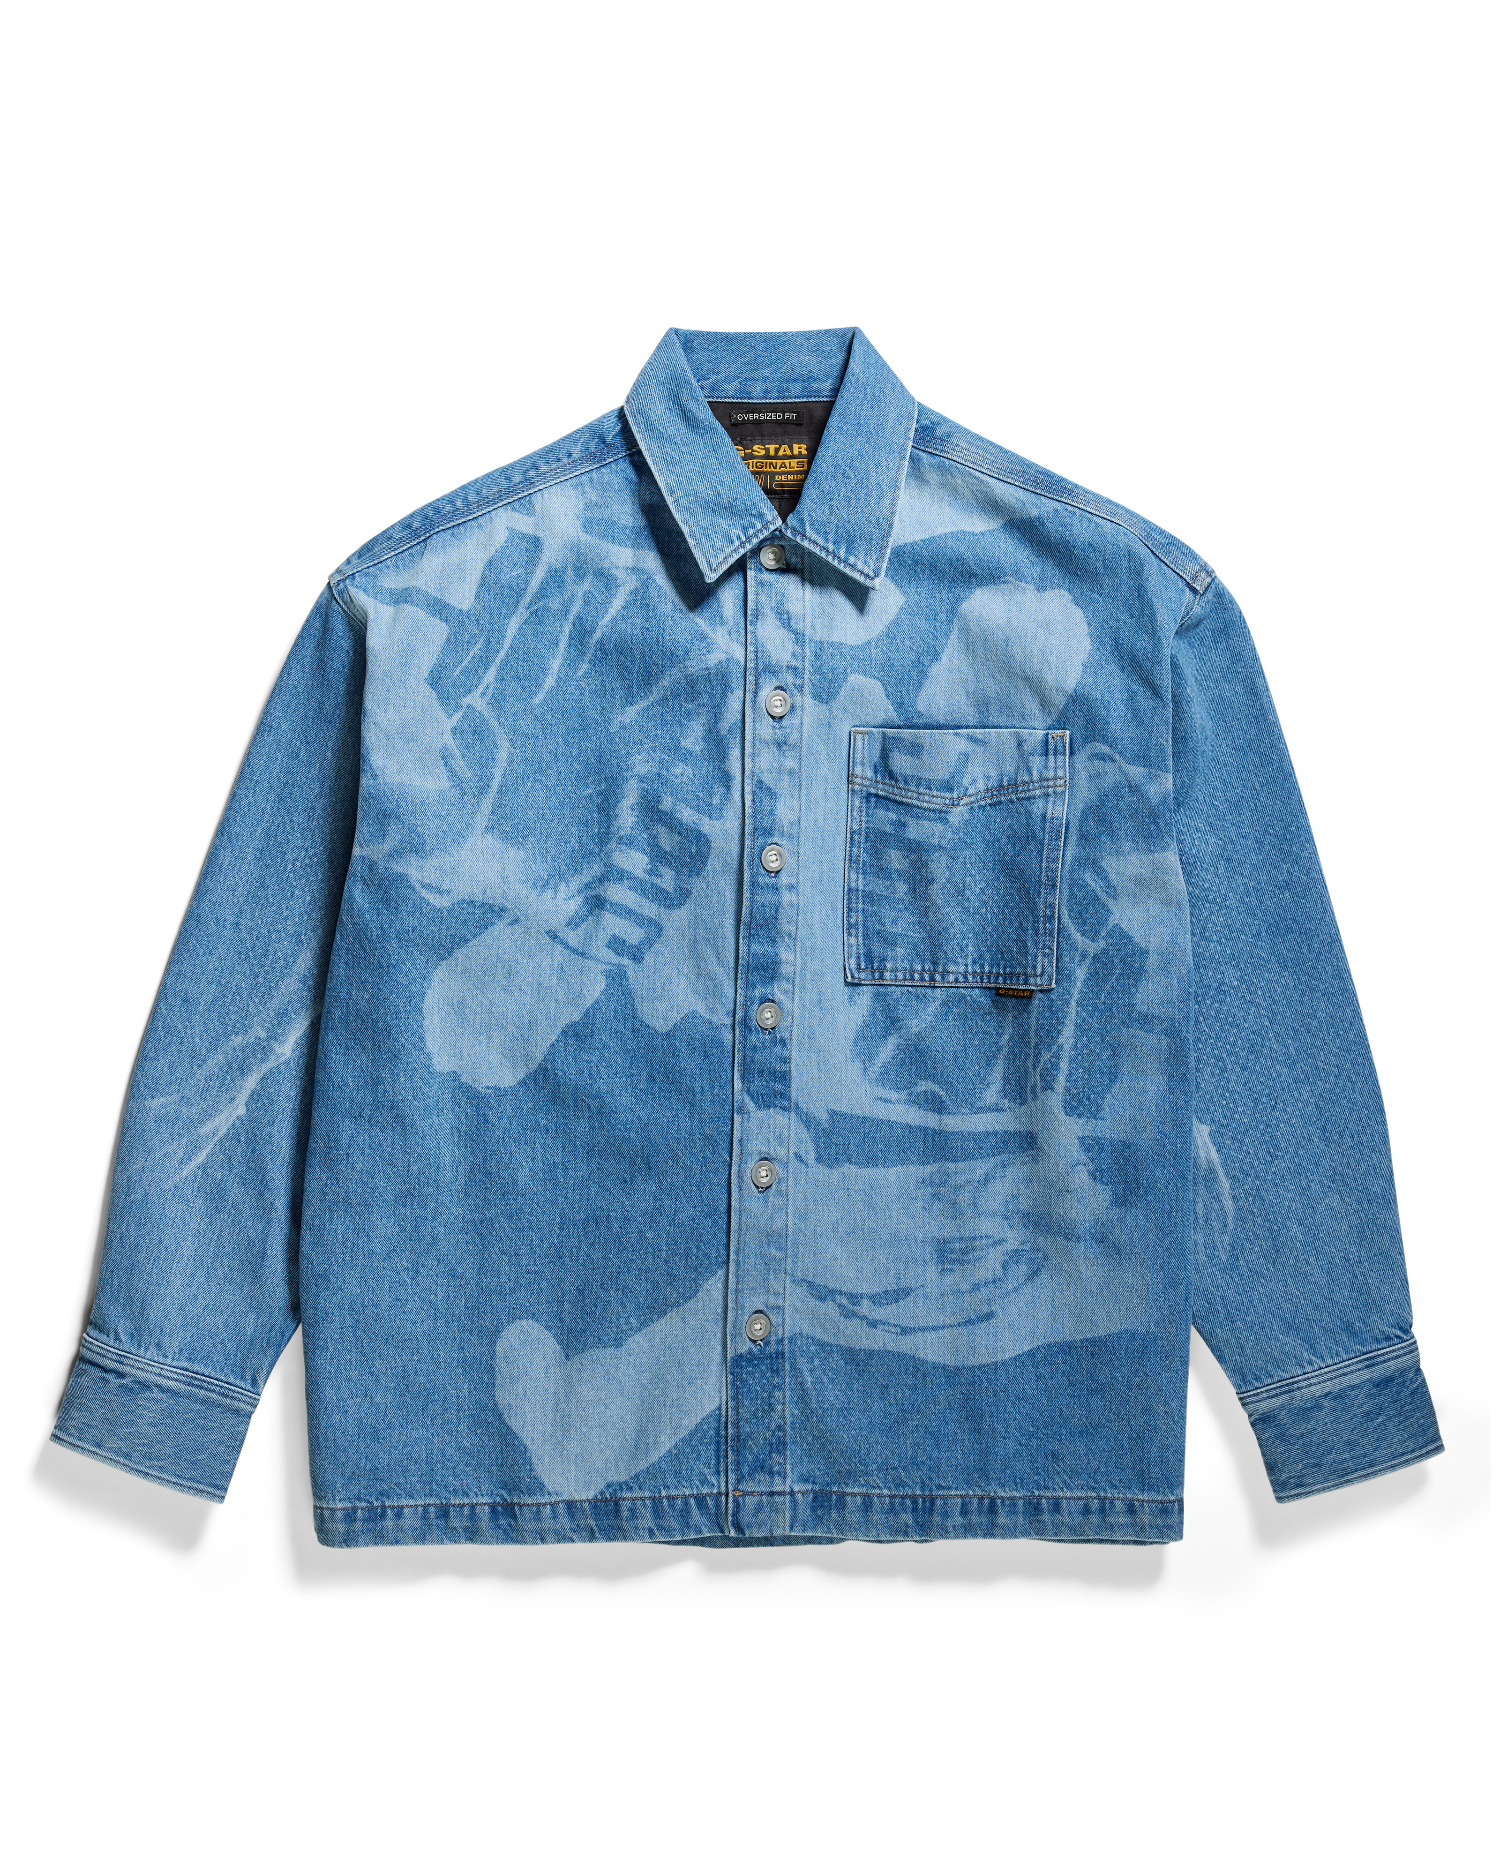 G-Star denim jacket in mid blue | ASOS